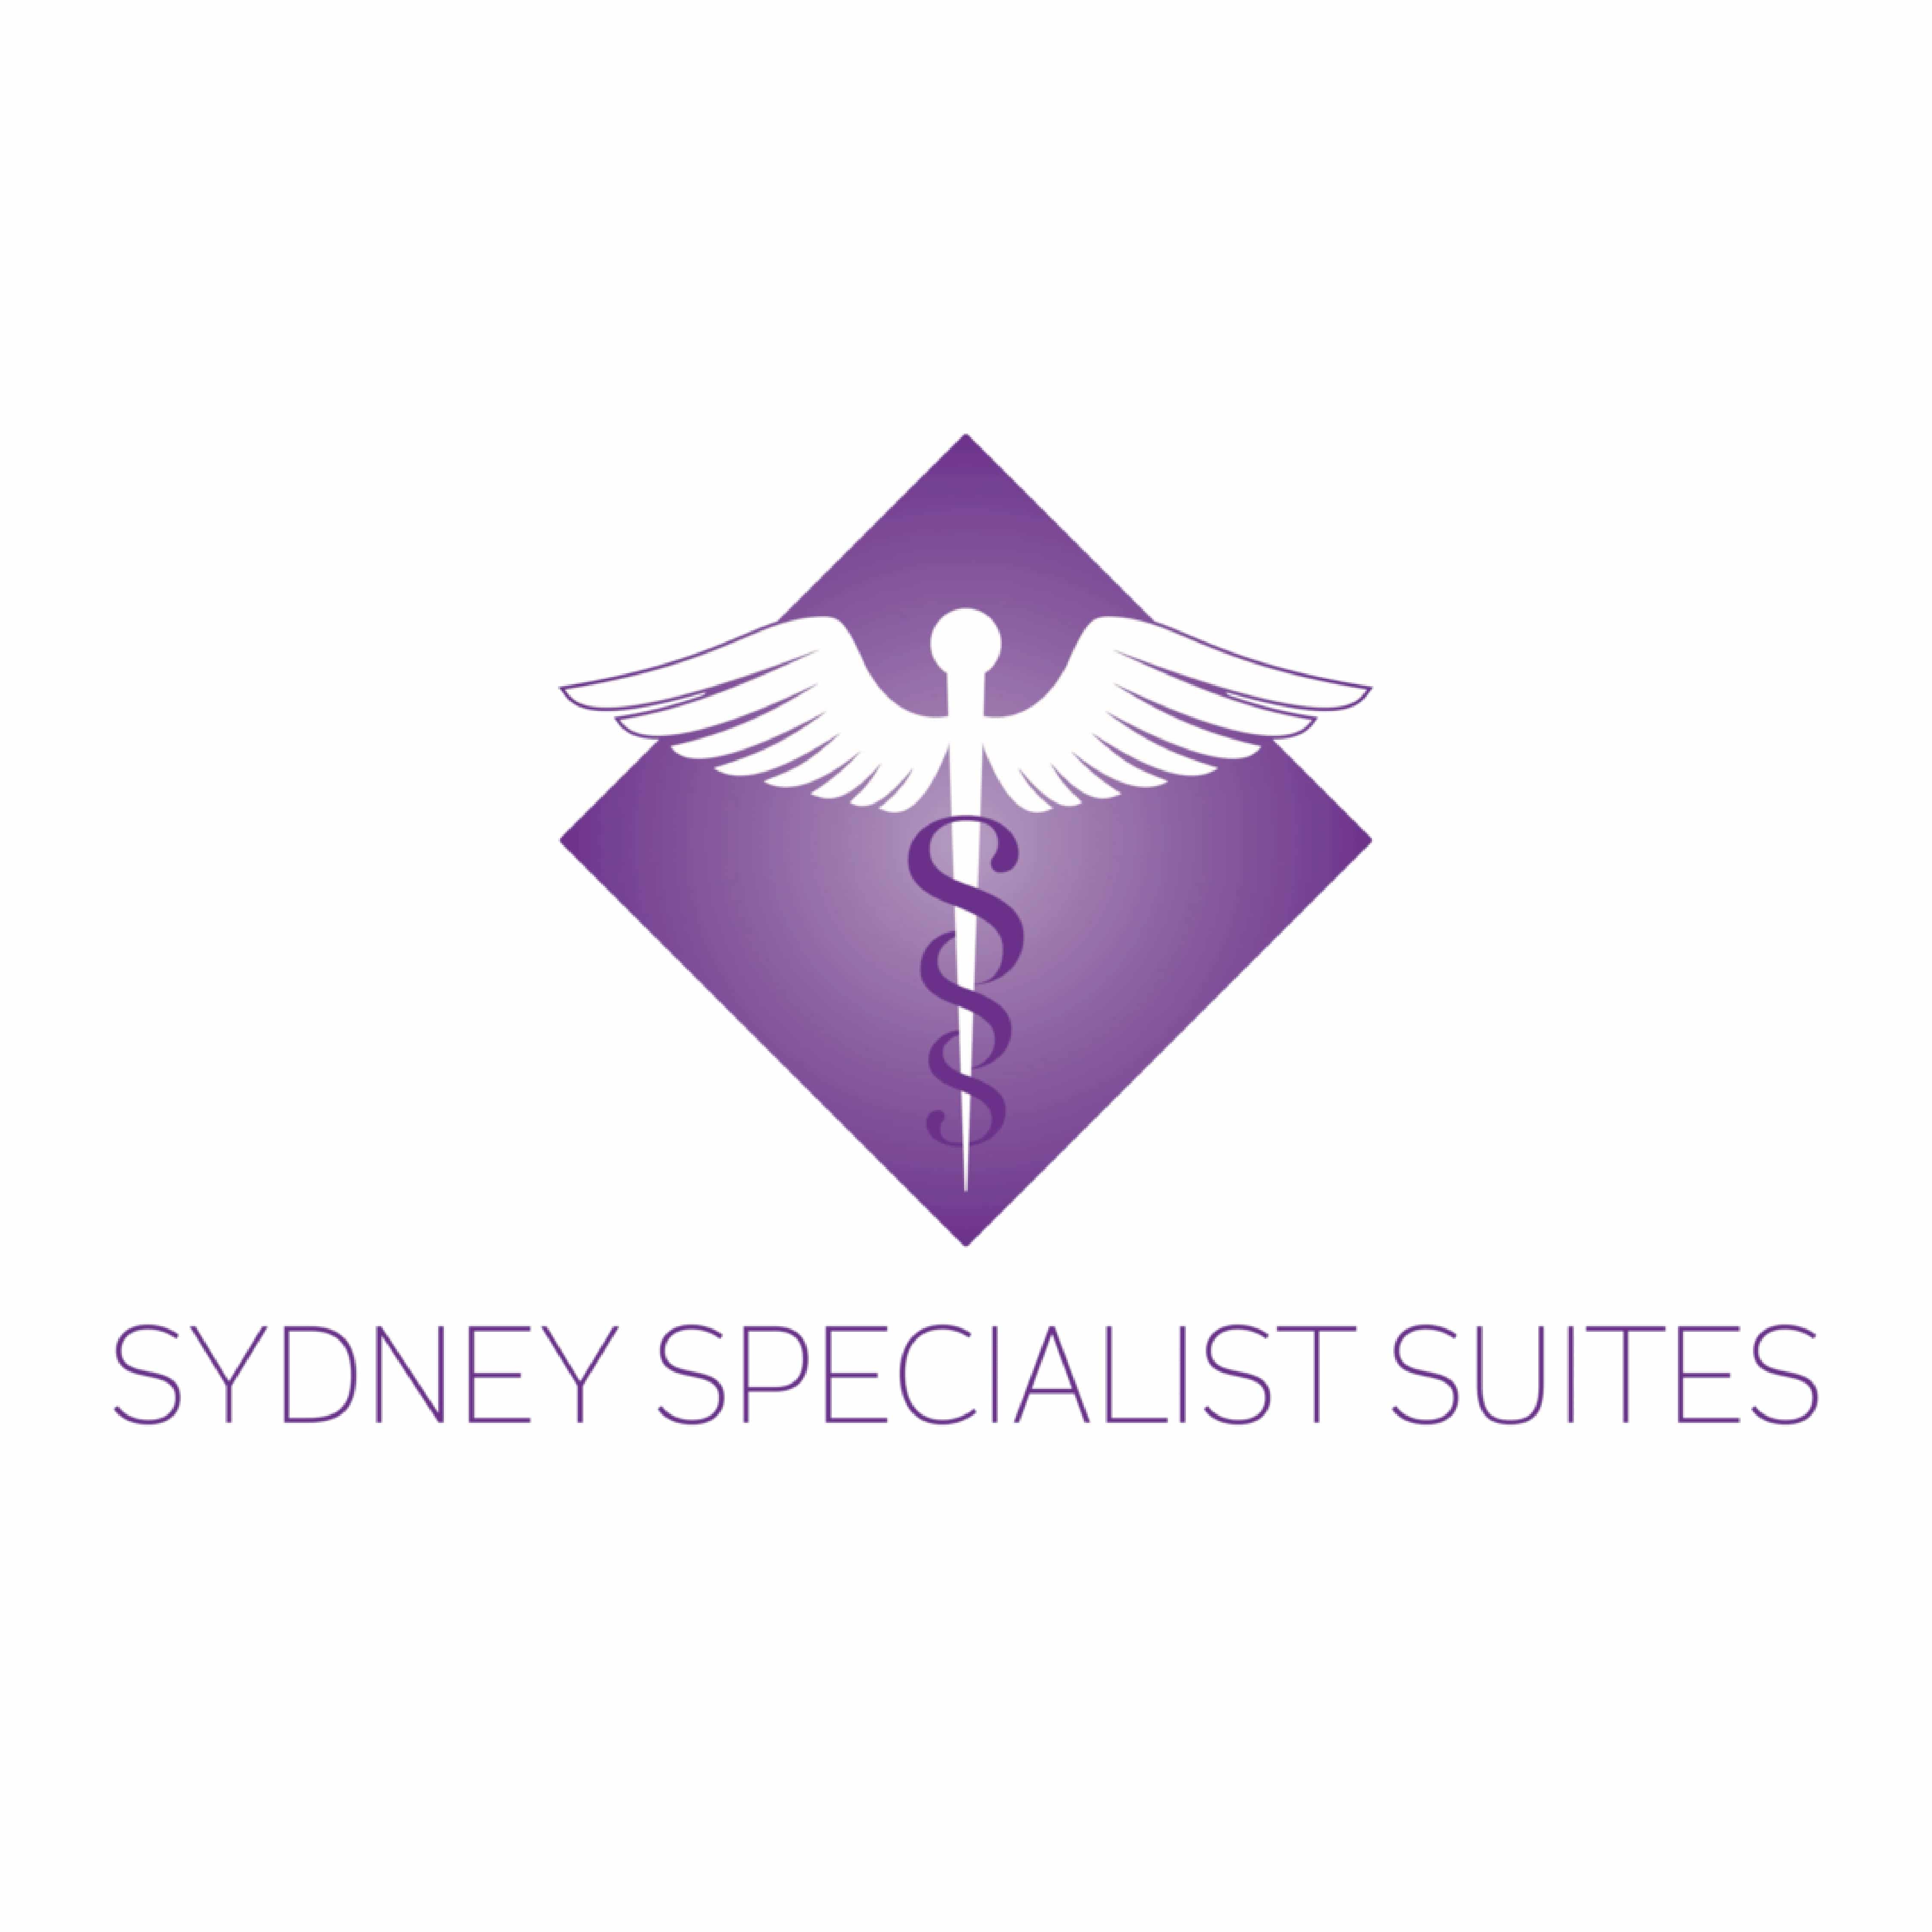 Sydney Specialist suites